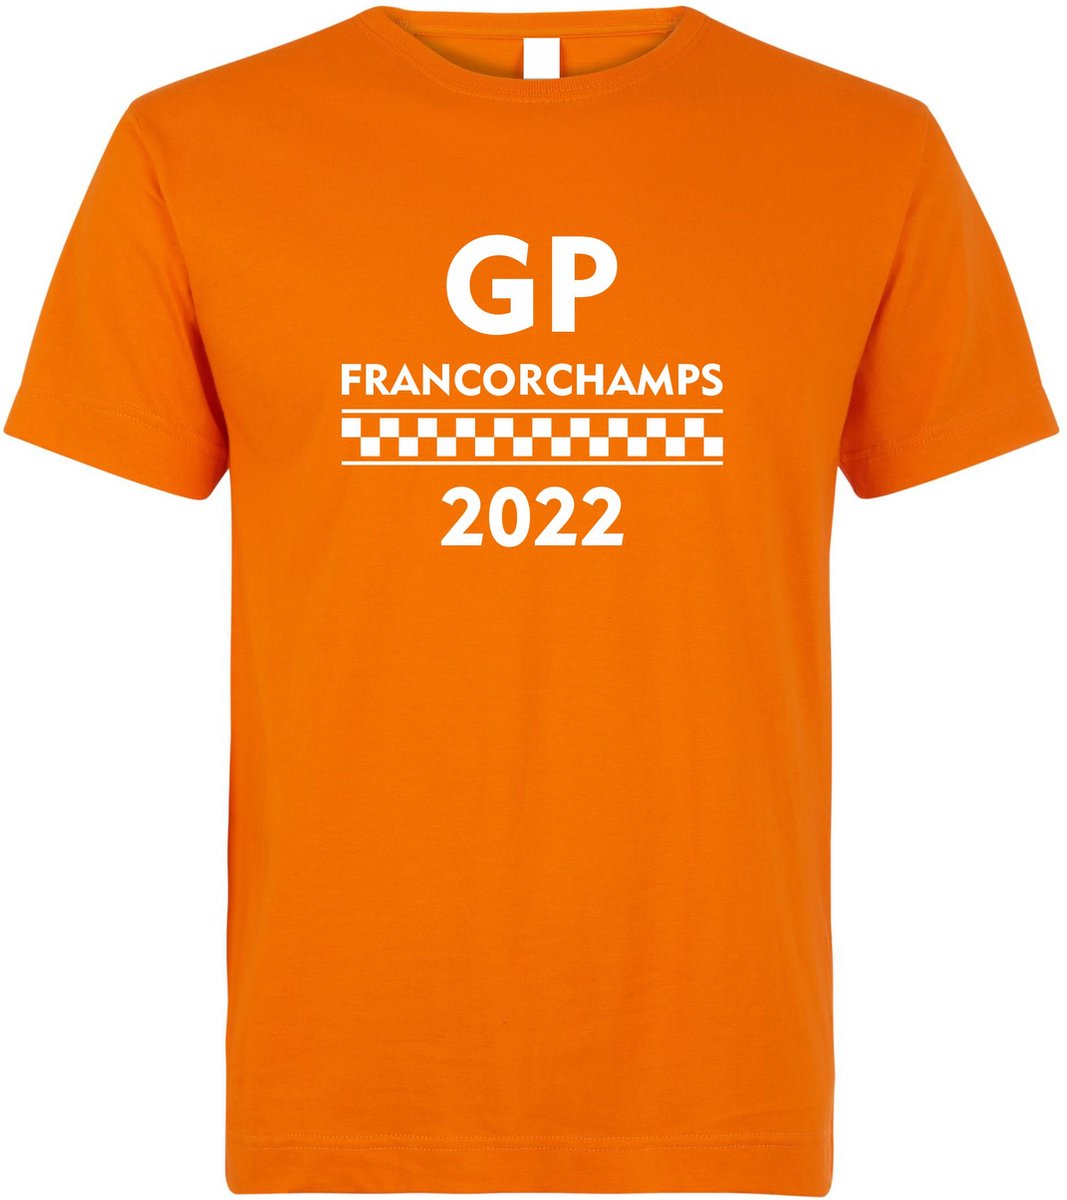 T-shirt kinderen GP Francorchamps 2022 | Max Verstappen / Red Bull Racing / Formule 1 fan | Grand Prix Circuit Spa-Francorchamps | kleding shirt | Oranje | maat 68